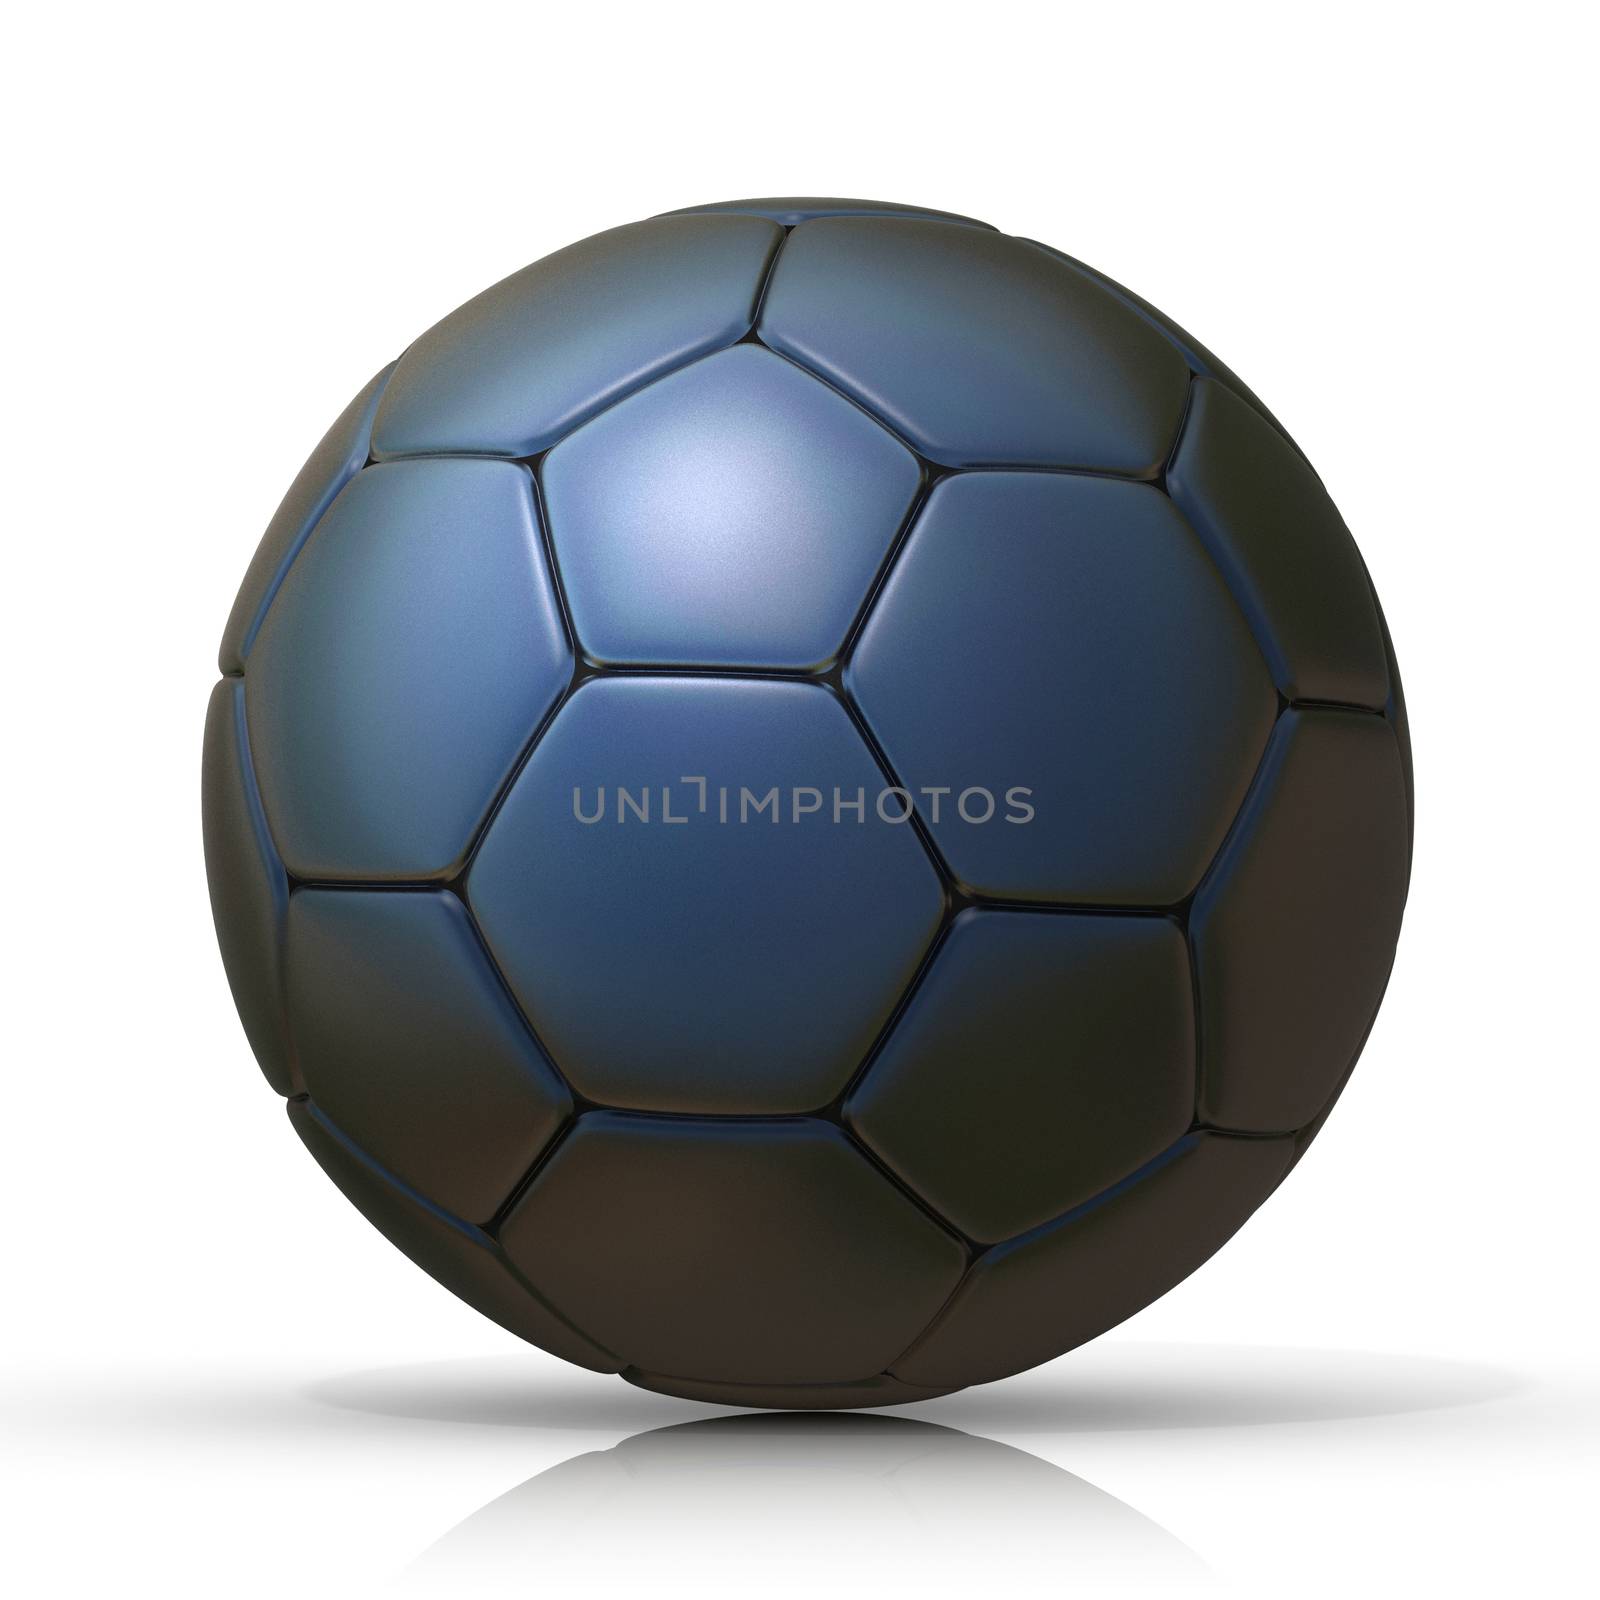 Black football - soccer ball by djmilic